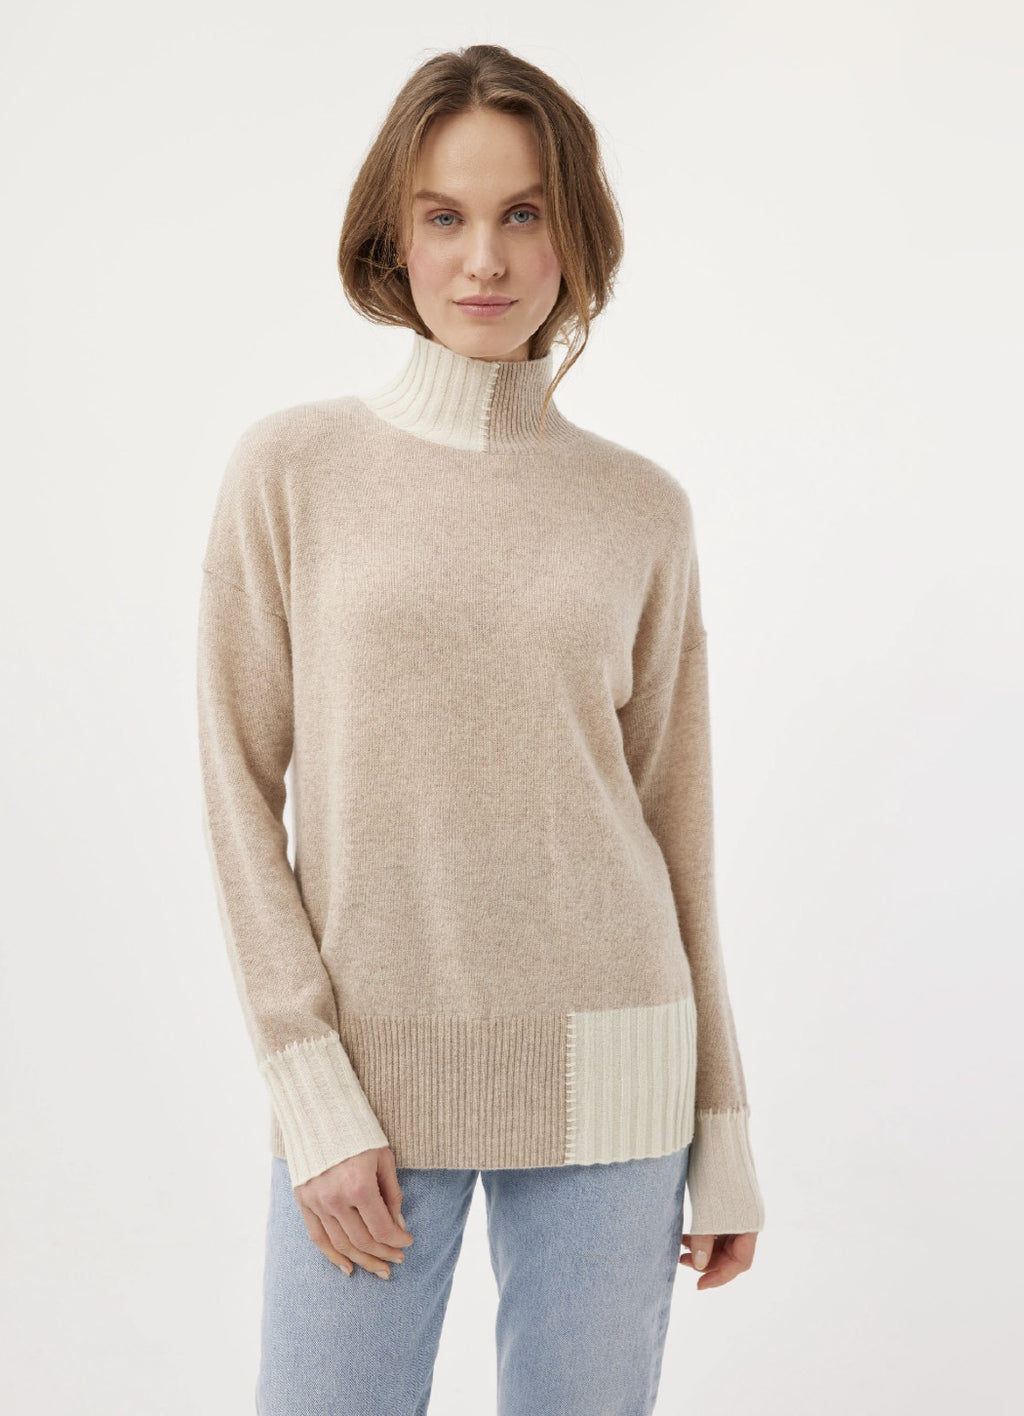 Mila Paloma Cashmere Mock Neck Sweater